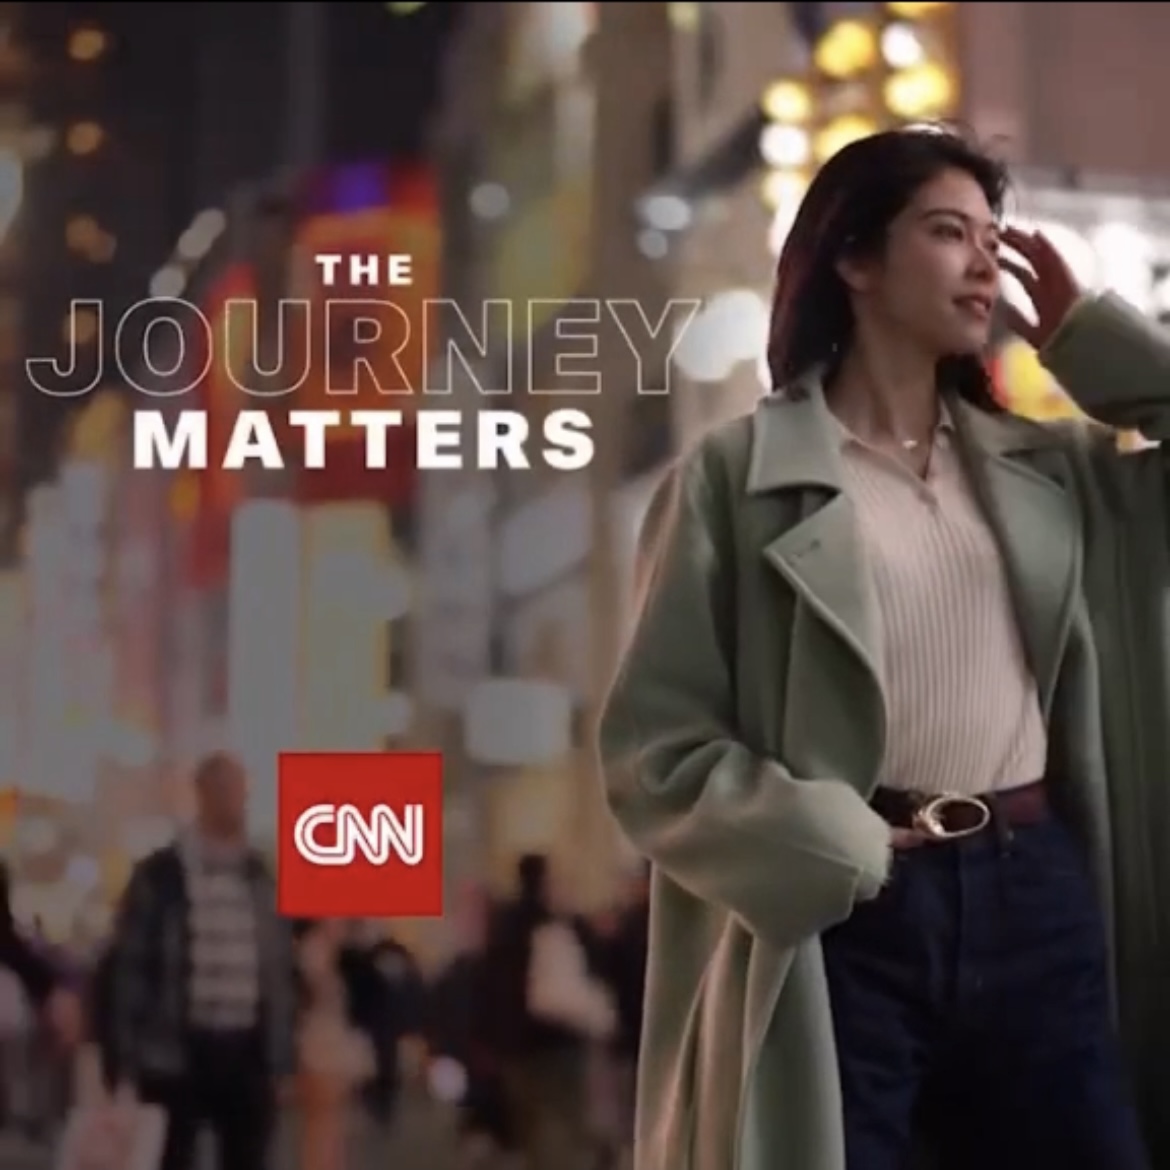 CNN INTERNATIONAL program [The Journey Matters]